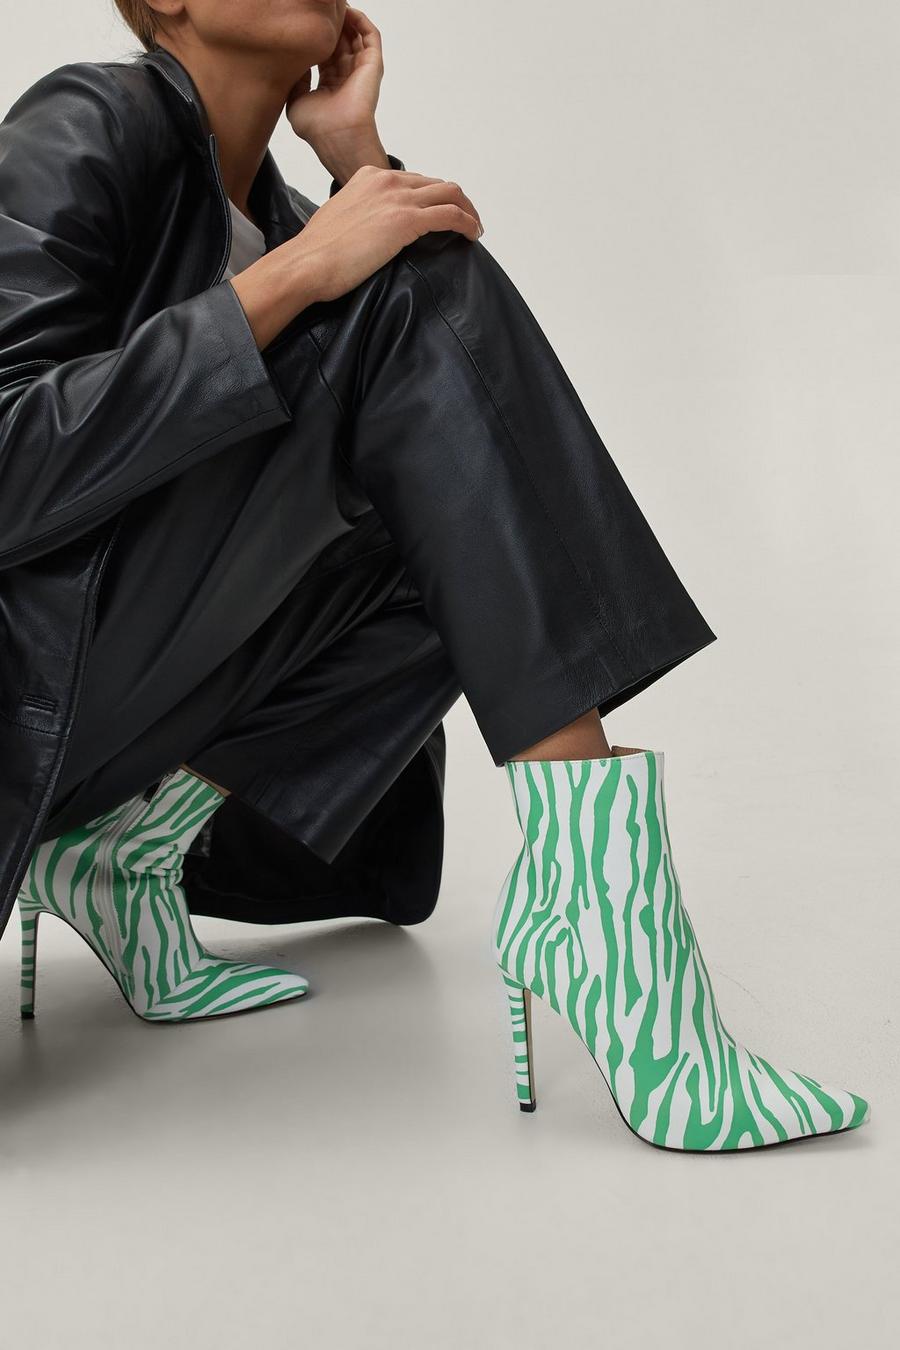 Zebra Print Stiletto Ankle Boots